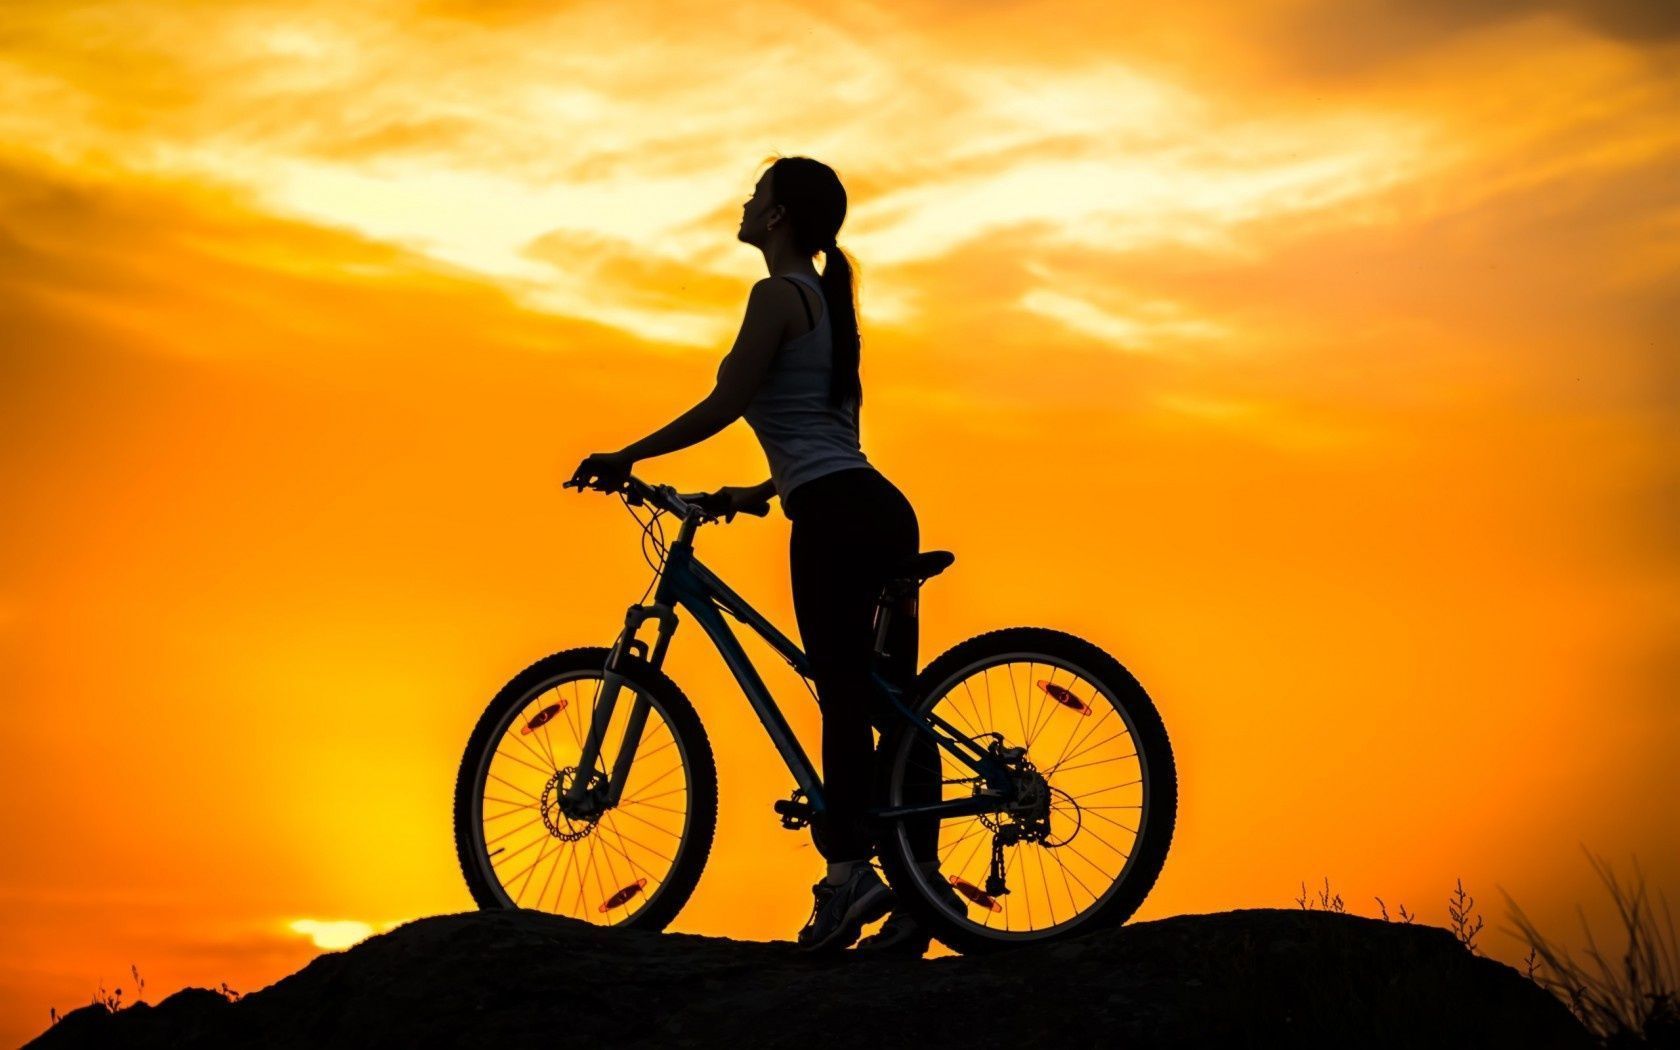 Cycling Desktop Wallpaper. Cycling Image. Cool Wallpaper. Bike silhouette, Bike ride, Silhouette photography